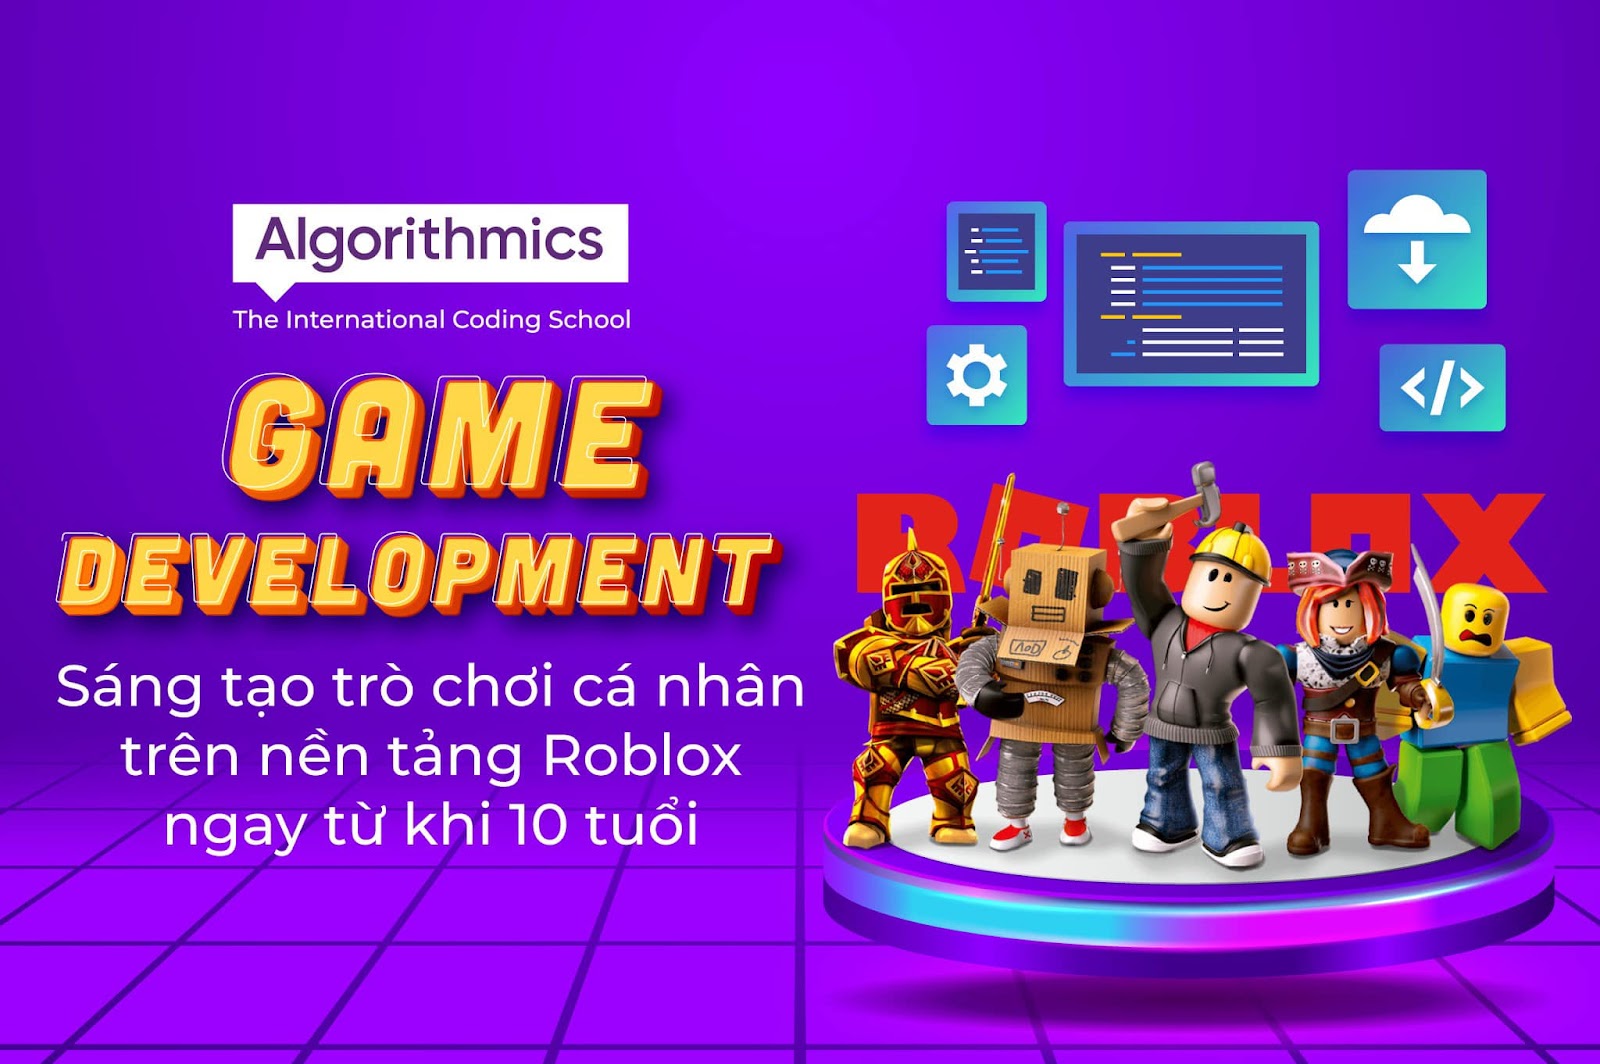 lo-trinh-hoc-lap-trinh-tu-co-ban-den-nang-cao-tai-algorithmics-game-development